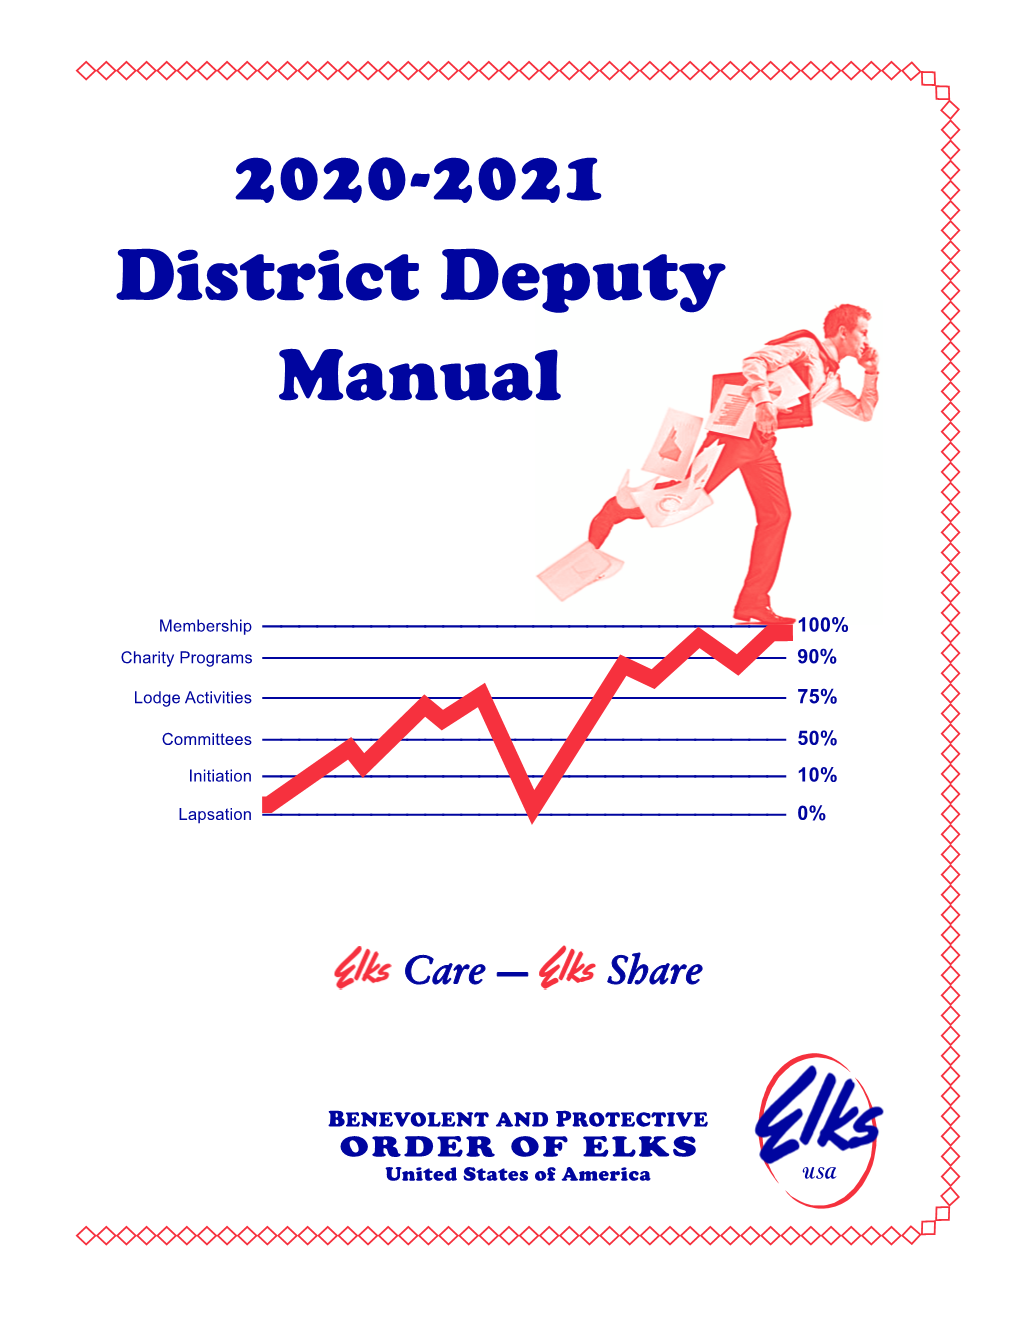 District Deputy Manual